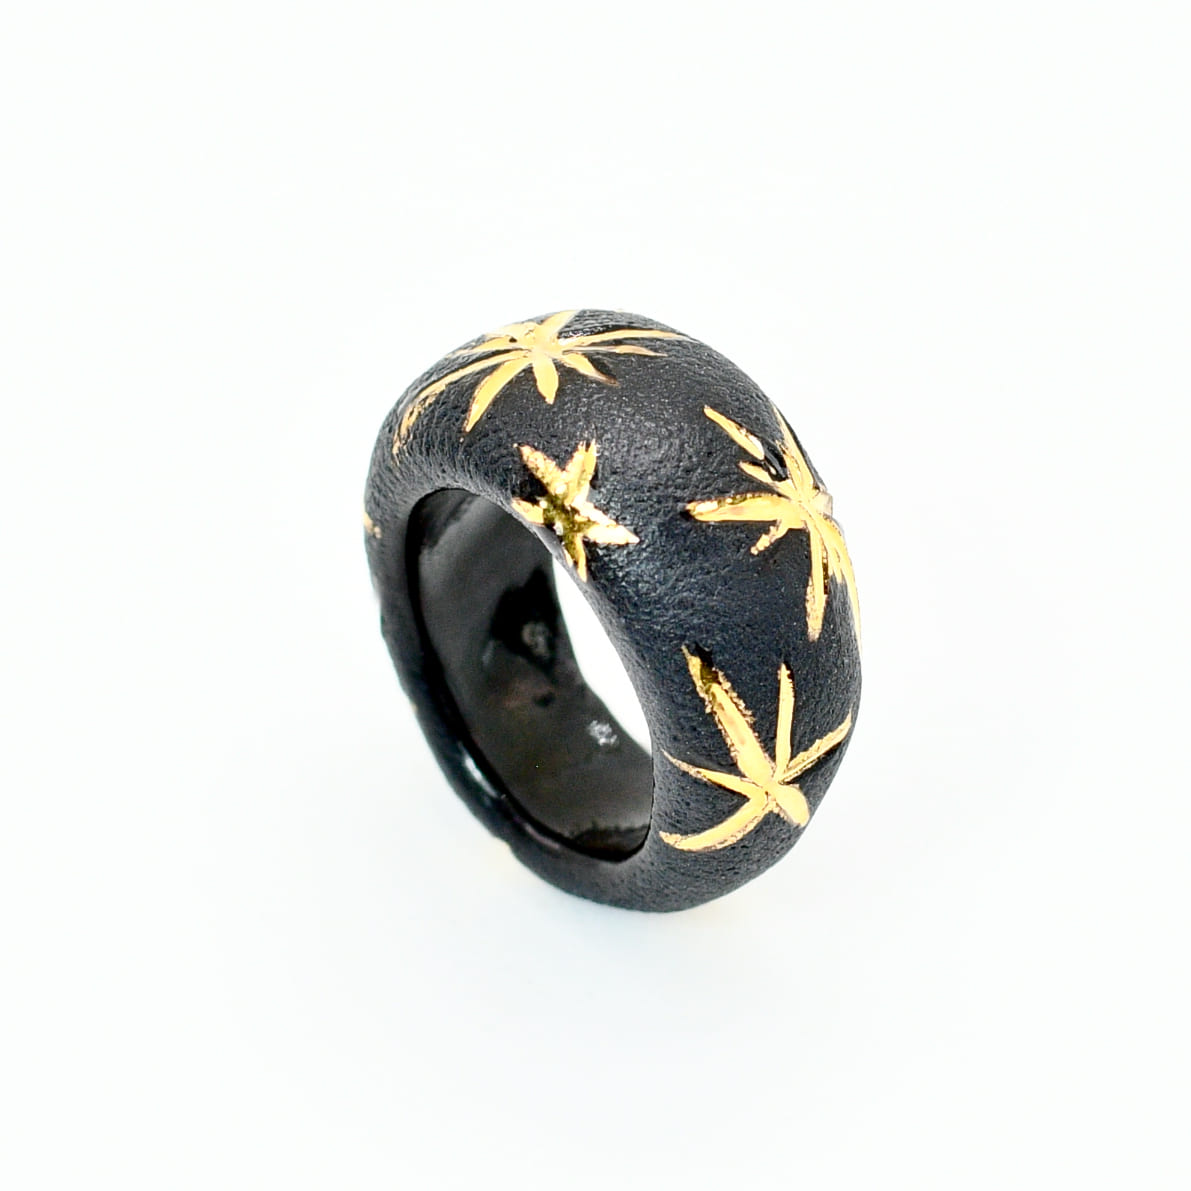 TAURI Black Porcelain Ceramic Ring